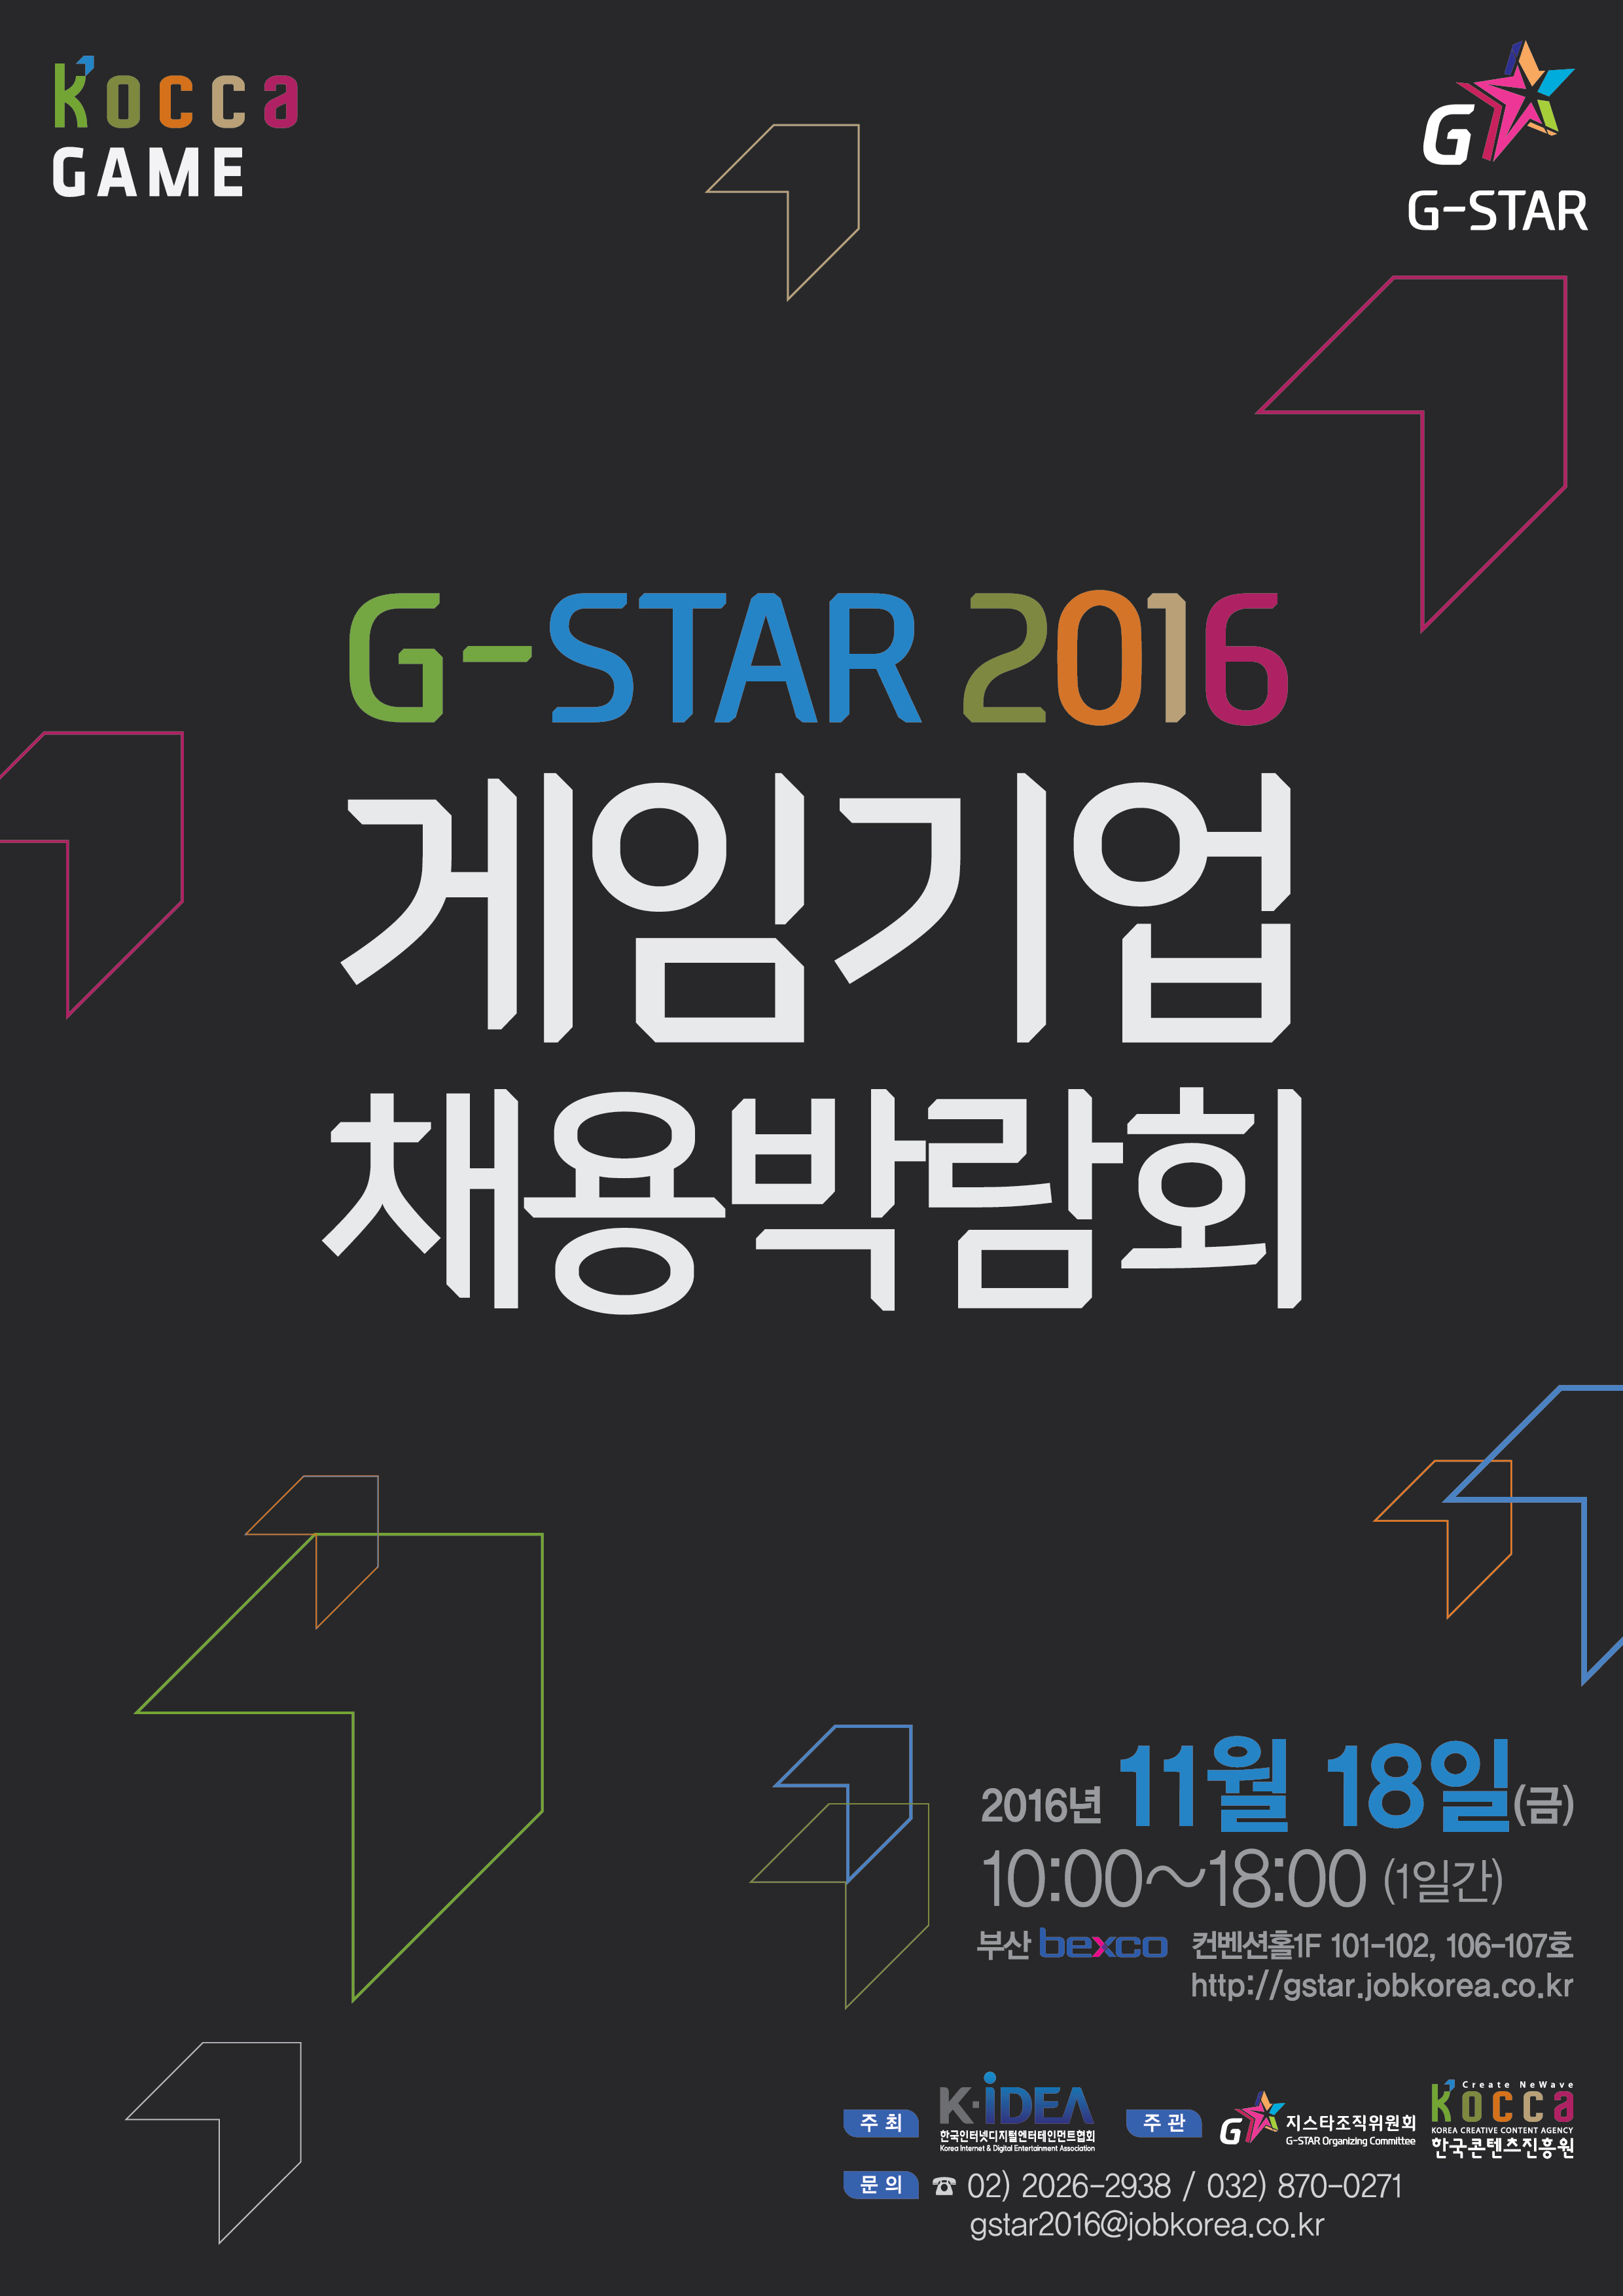  G-STAR 2016 게임기업 채용박람회 행사 포스터.jpg